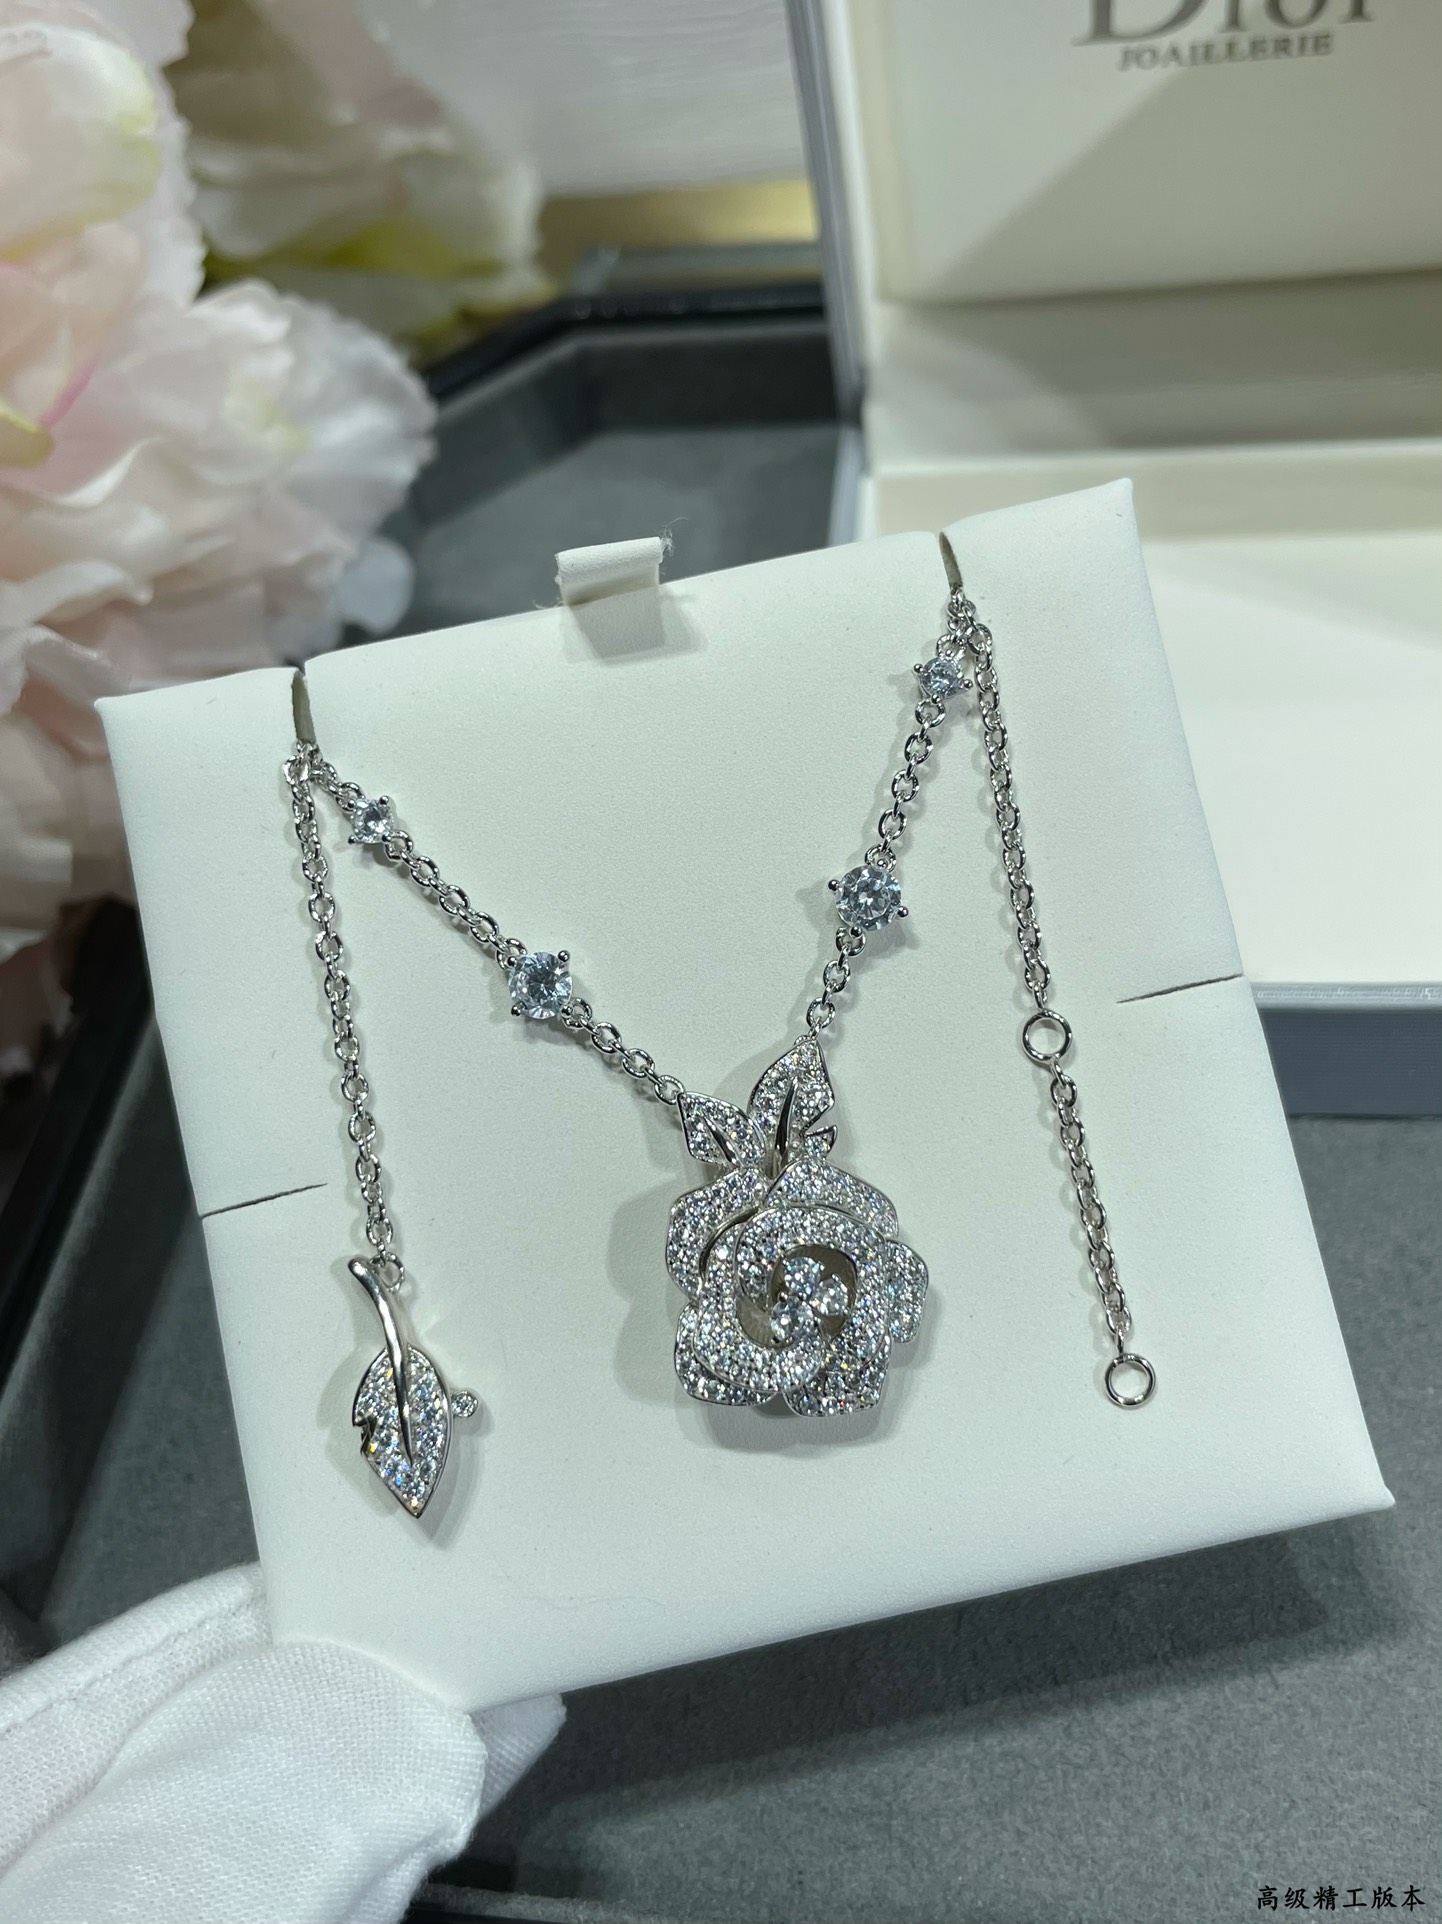 Dior Jewelry Necklaces & Pendants Rose